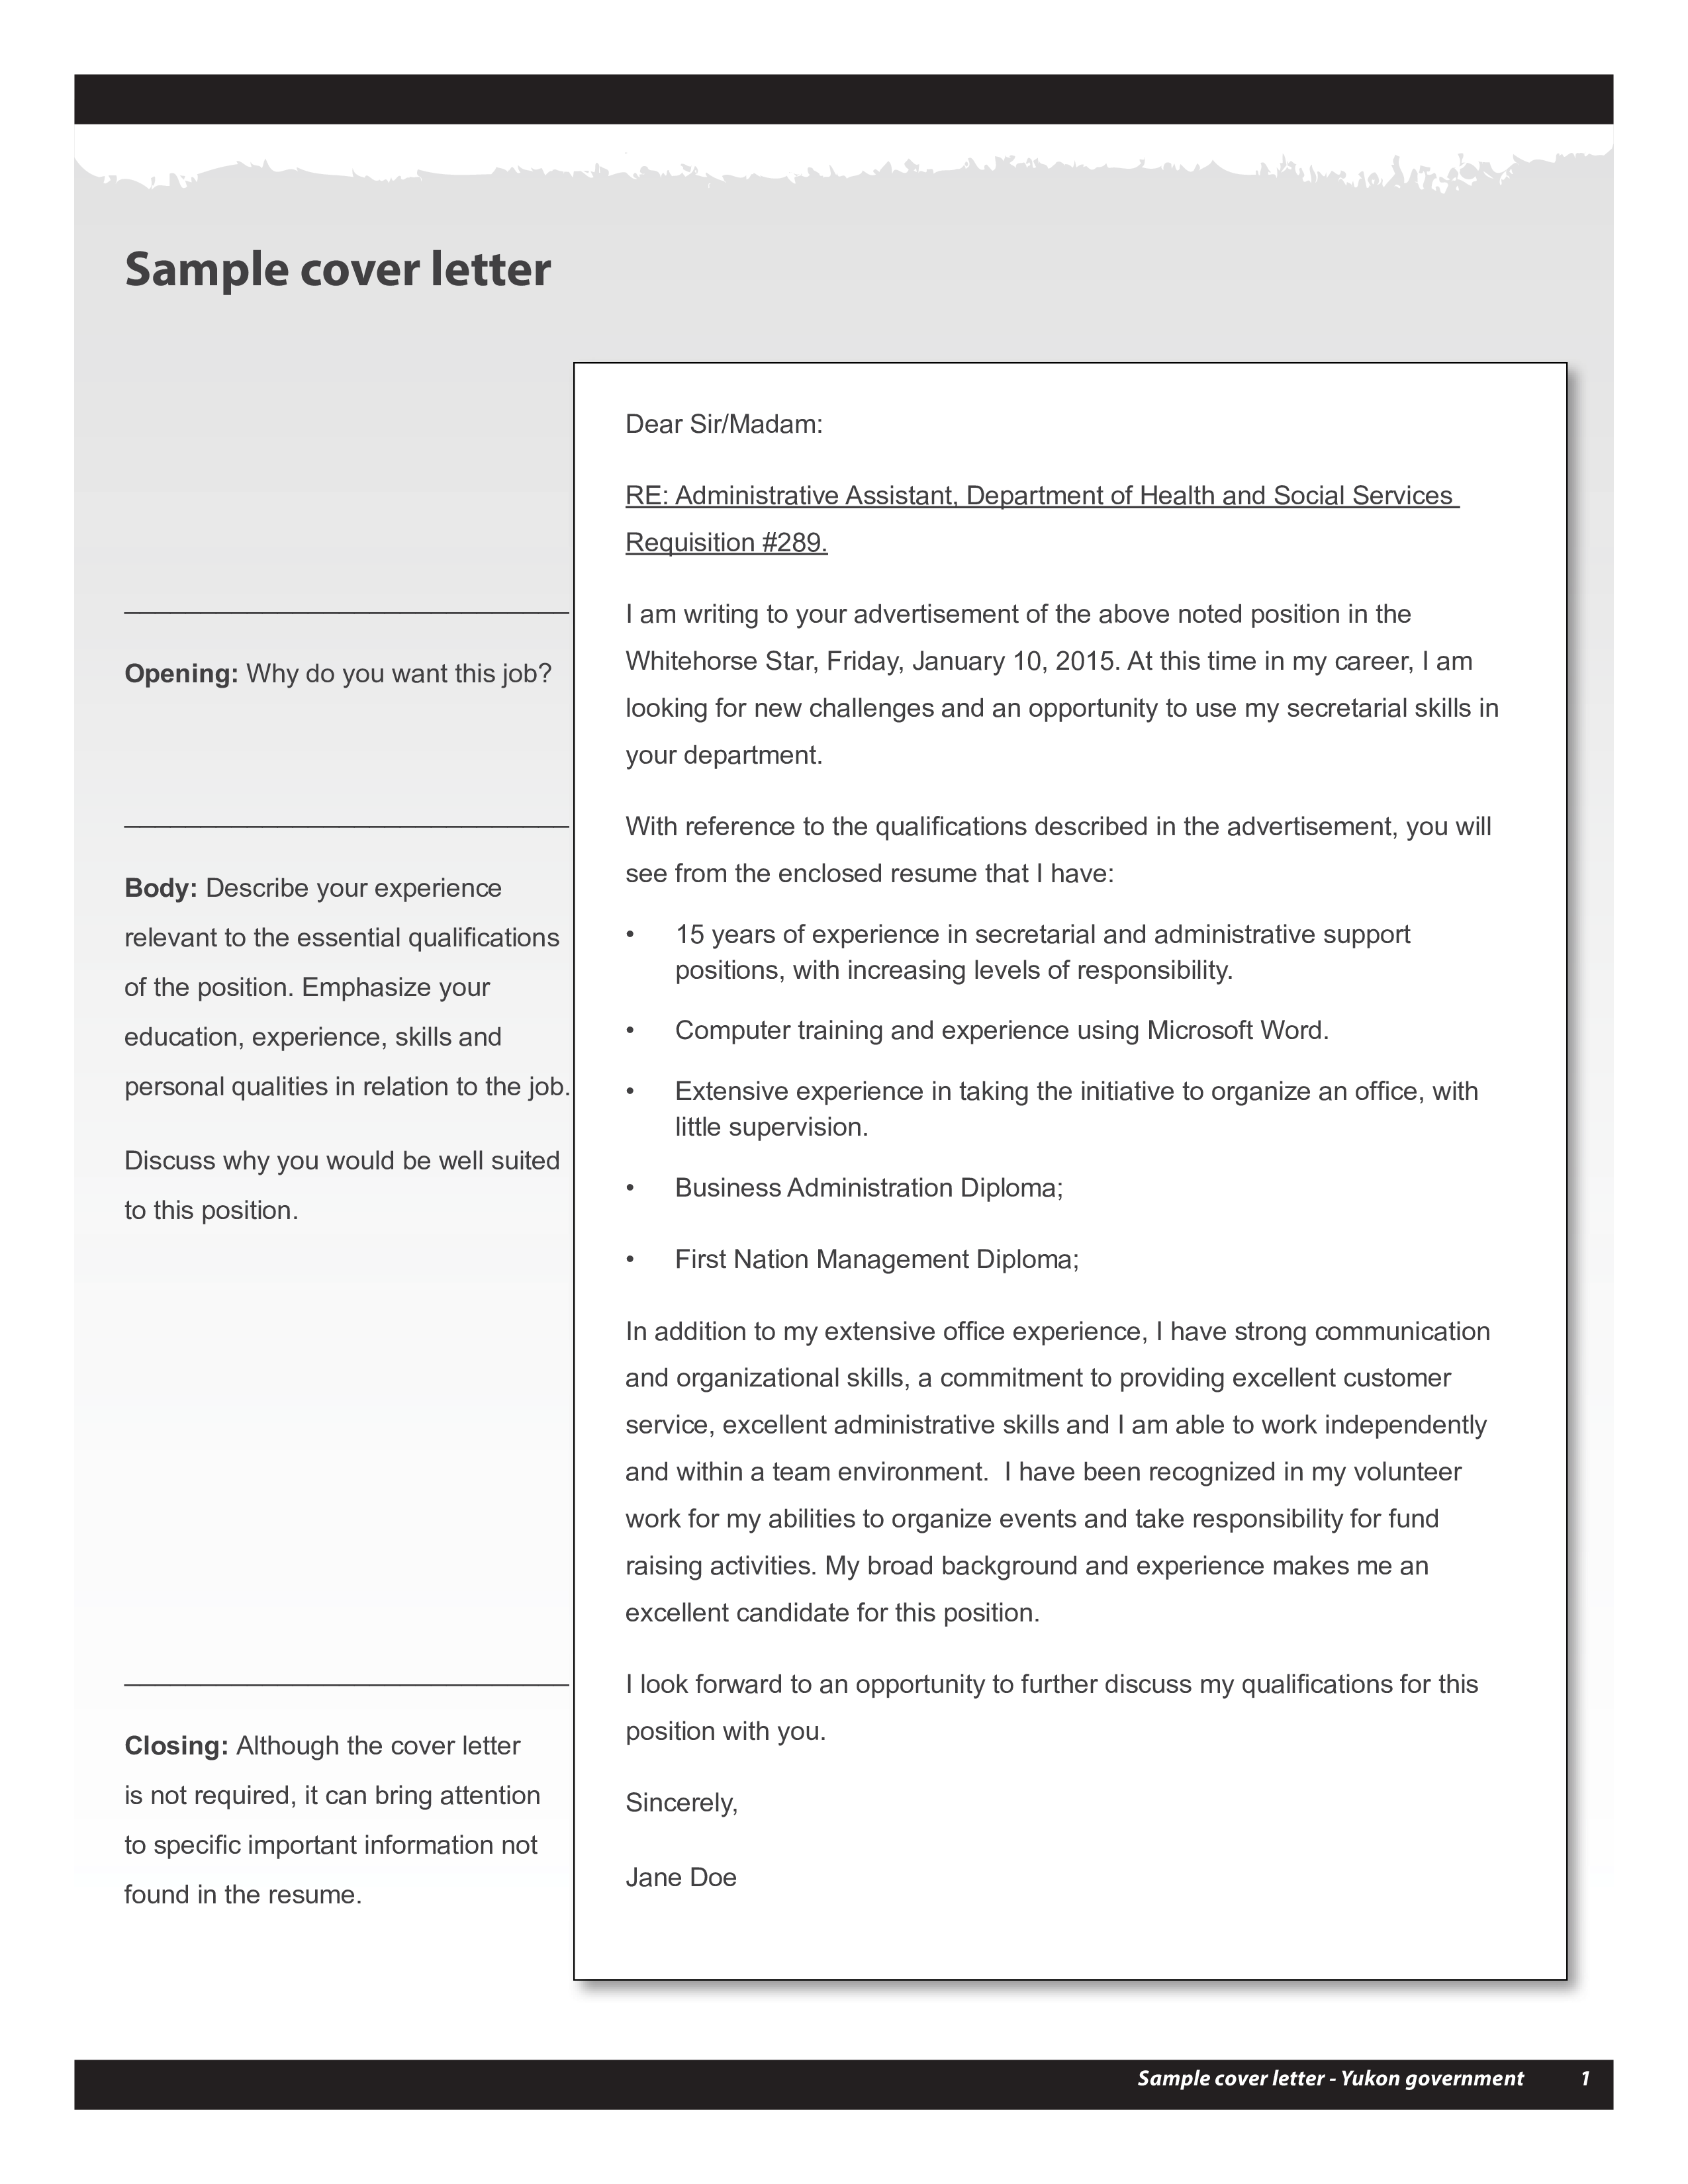 Resume Application Cover Letter main image